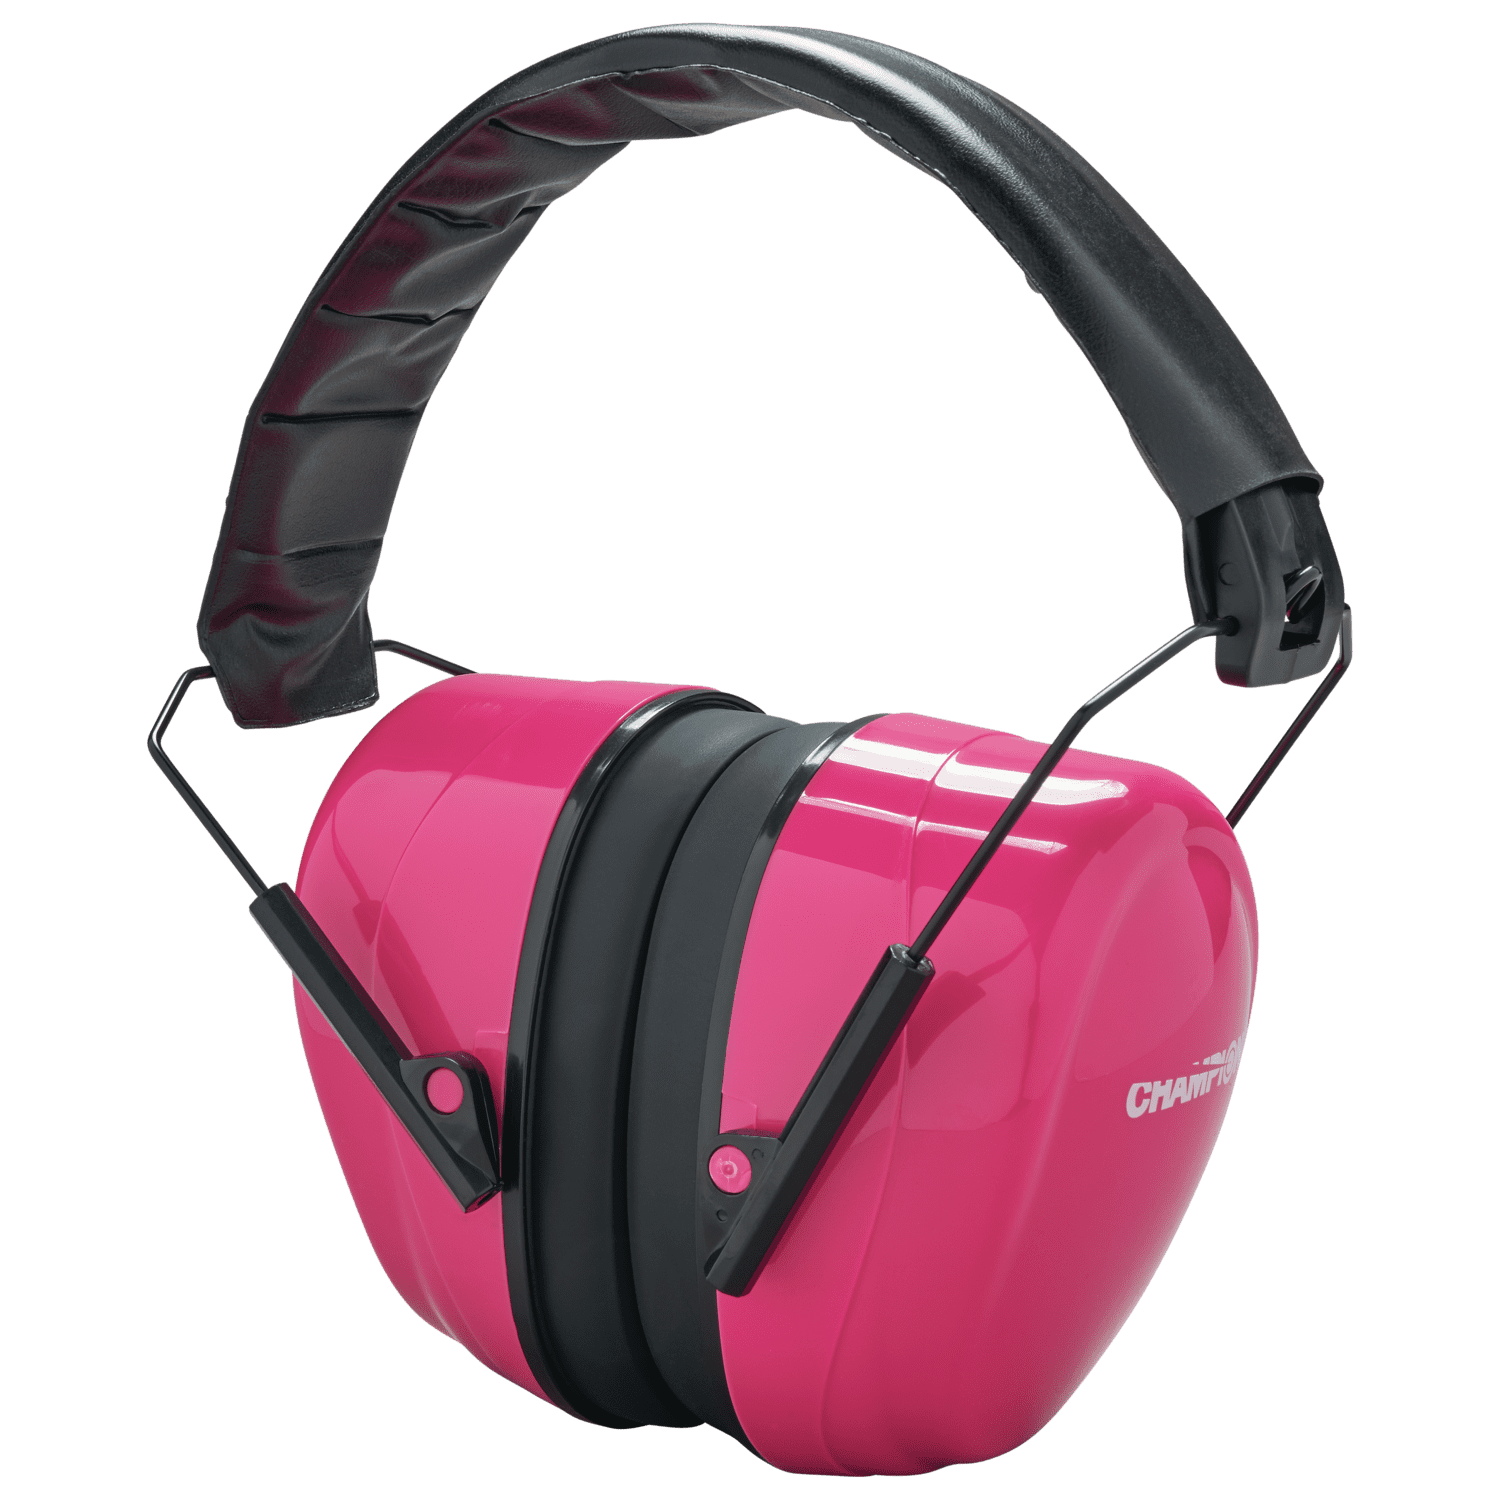 Pink Ear Muffs Gun Range Safety Glasses Shooting Noise Block Headphones Earmuffs 